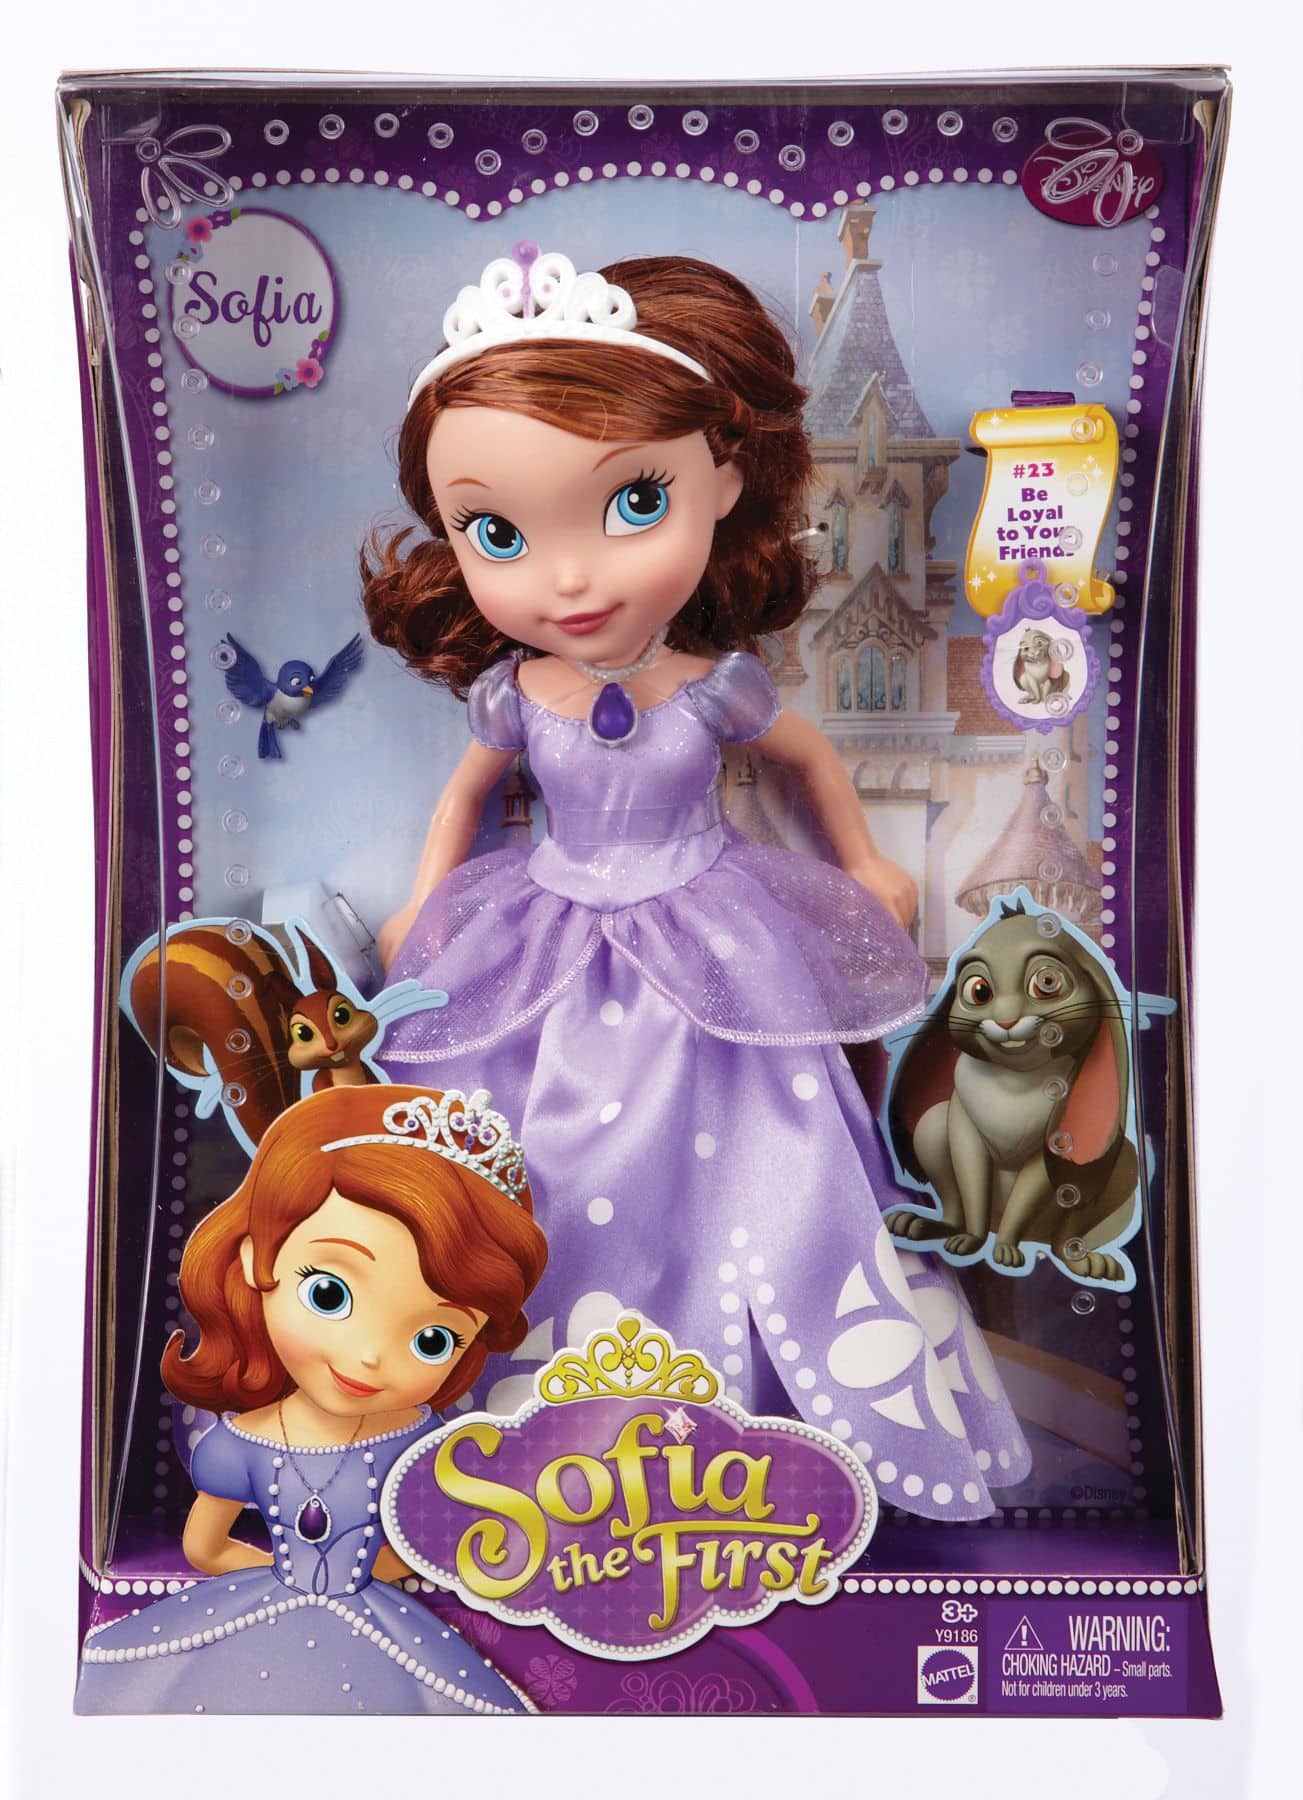 Disney Sofia The First Royal Family Small Doll Set